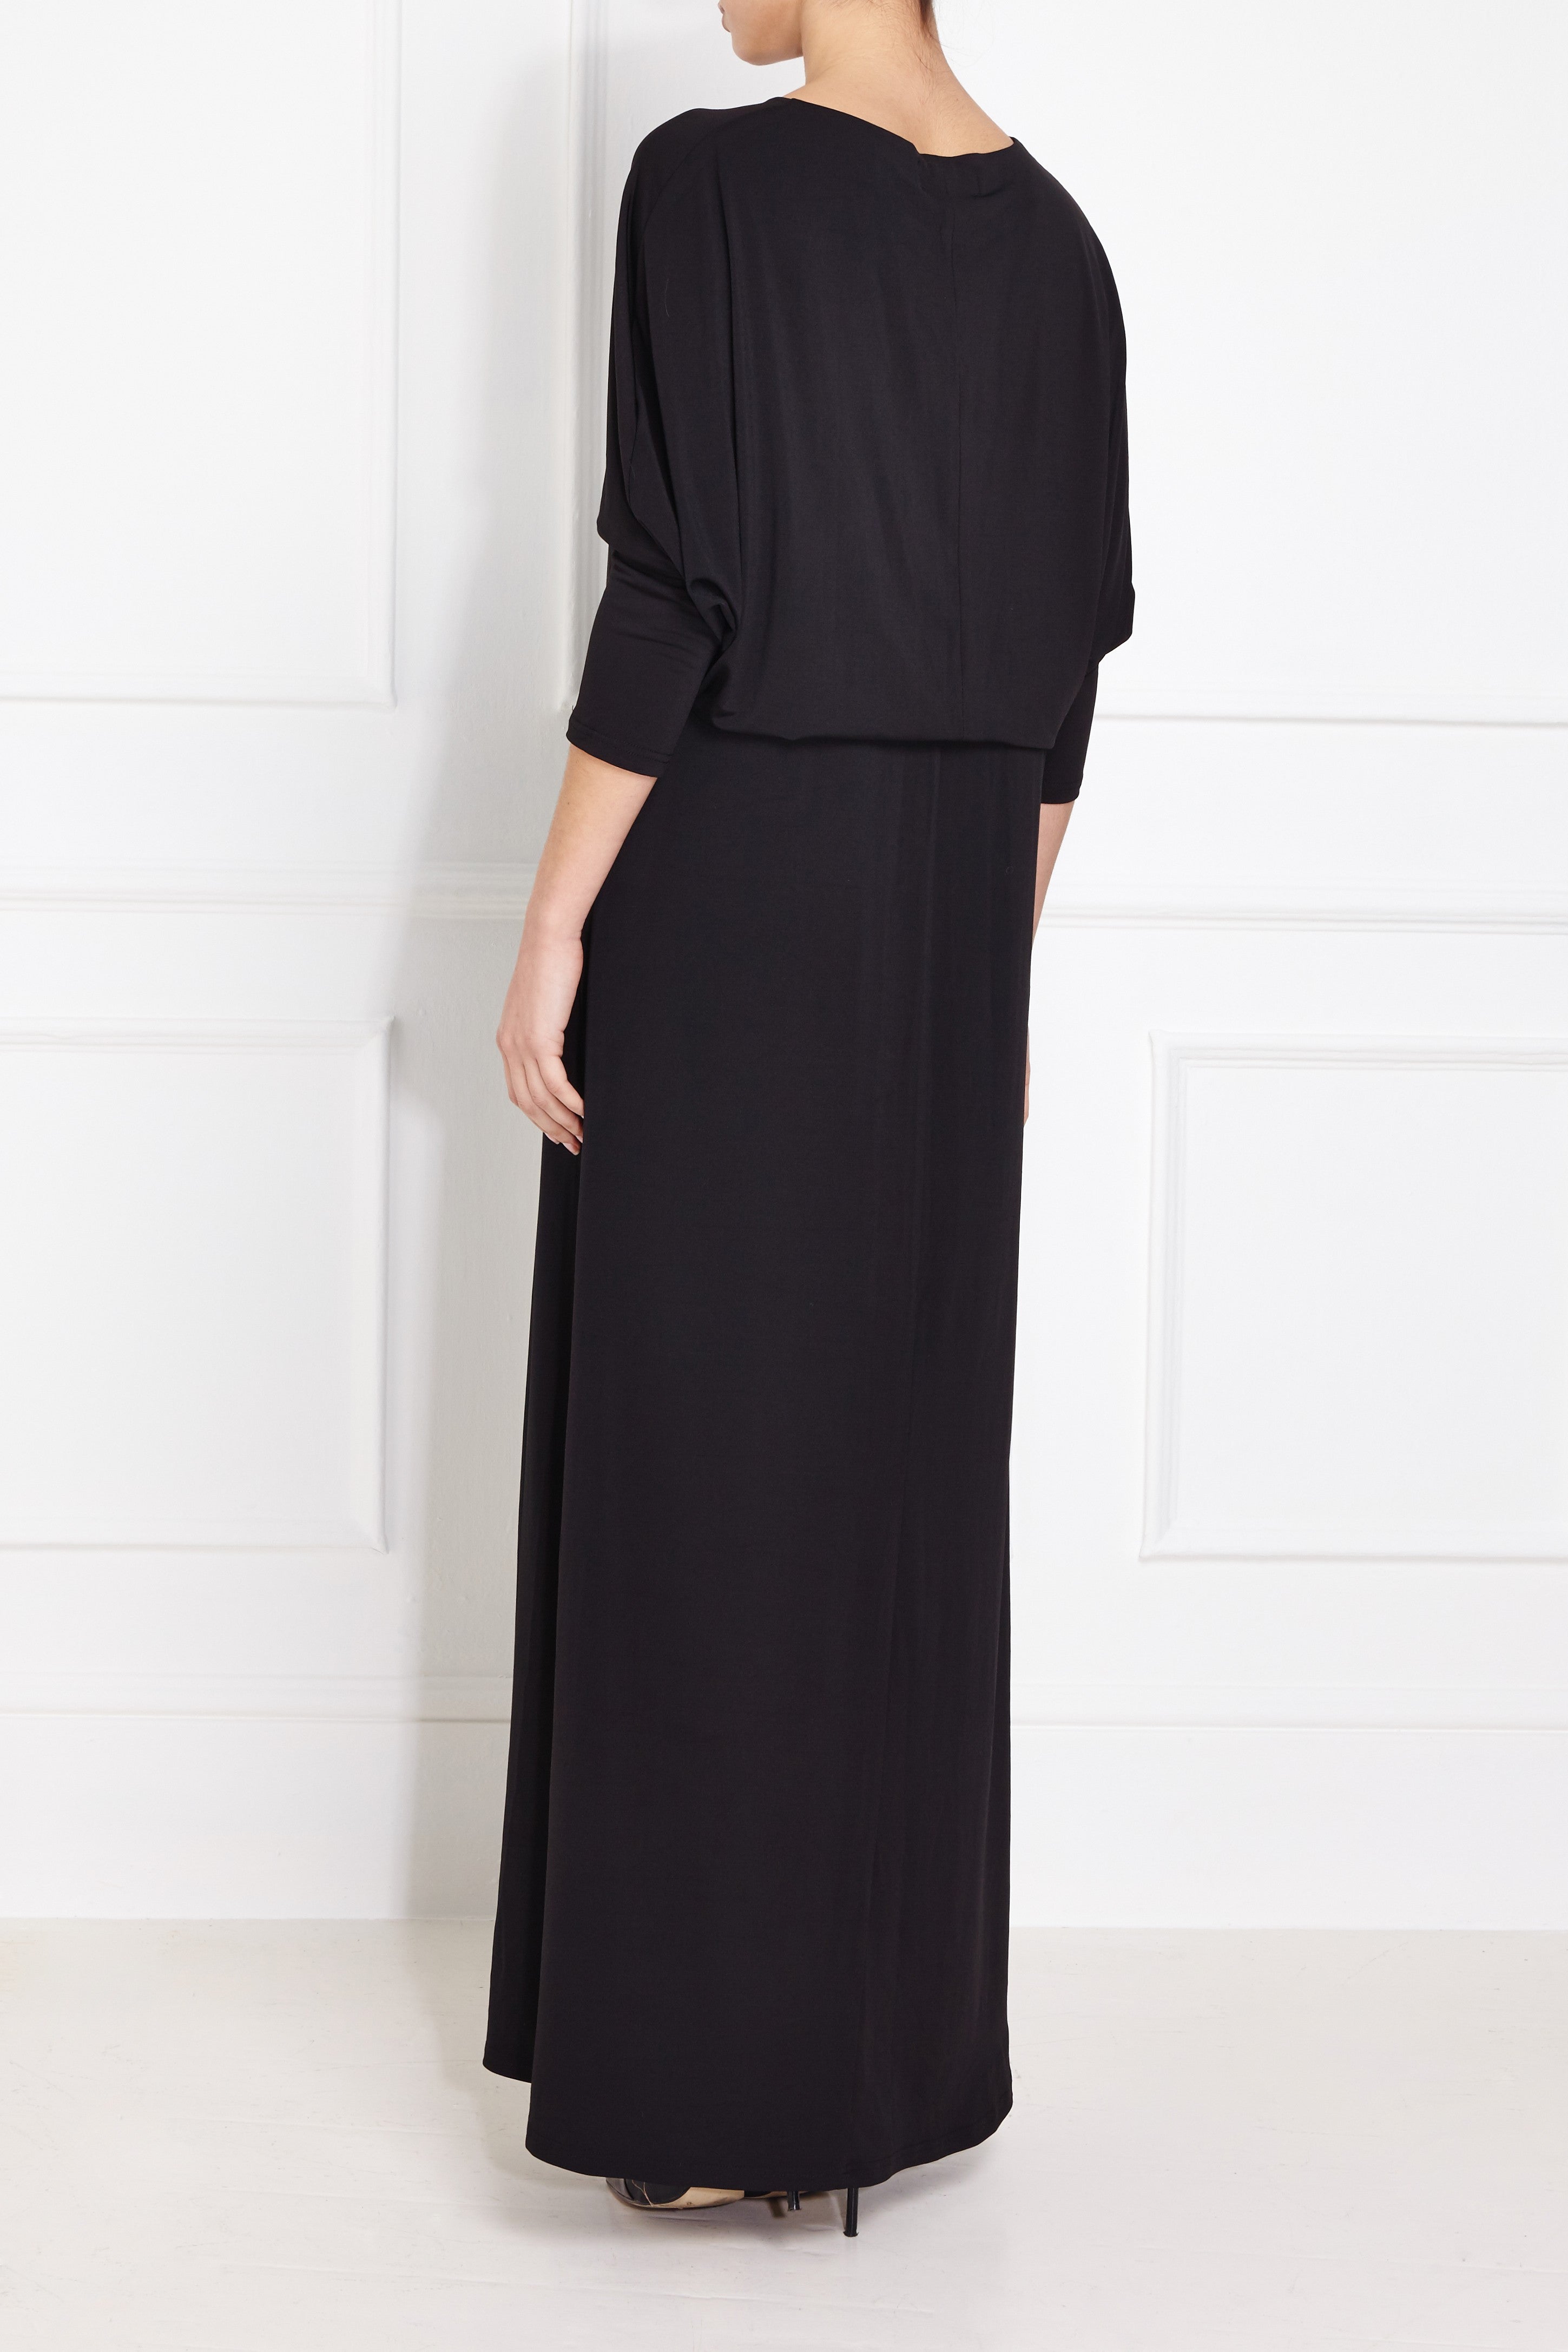 Black Jersey Abaya